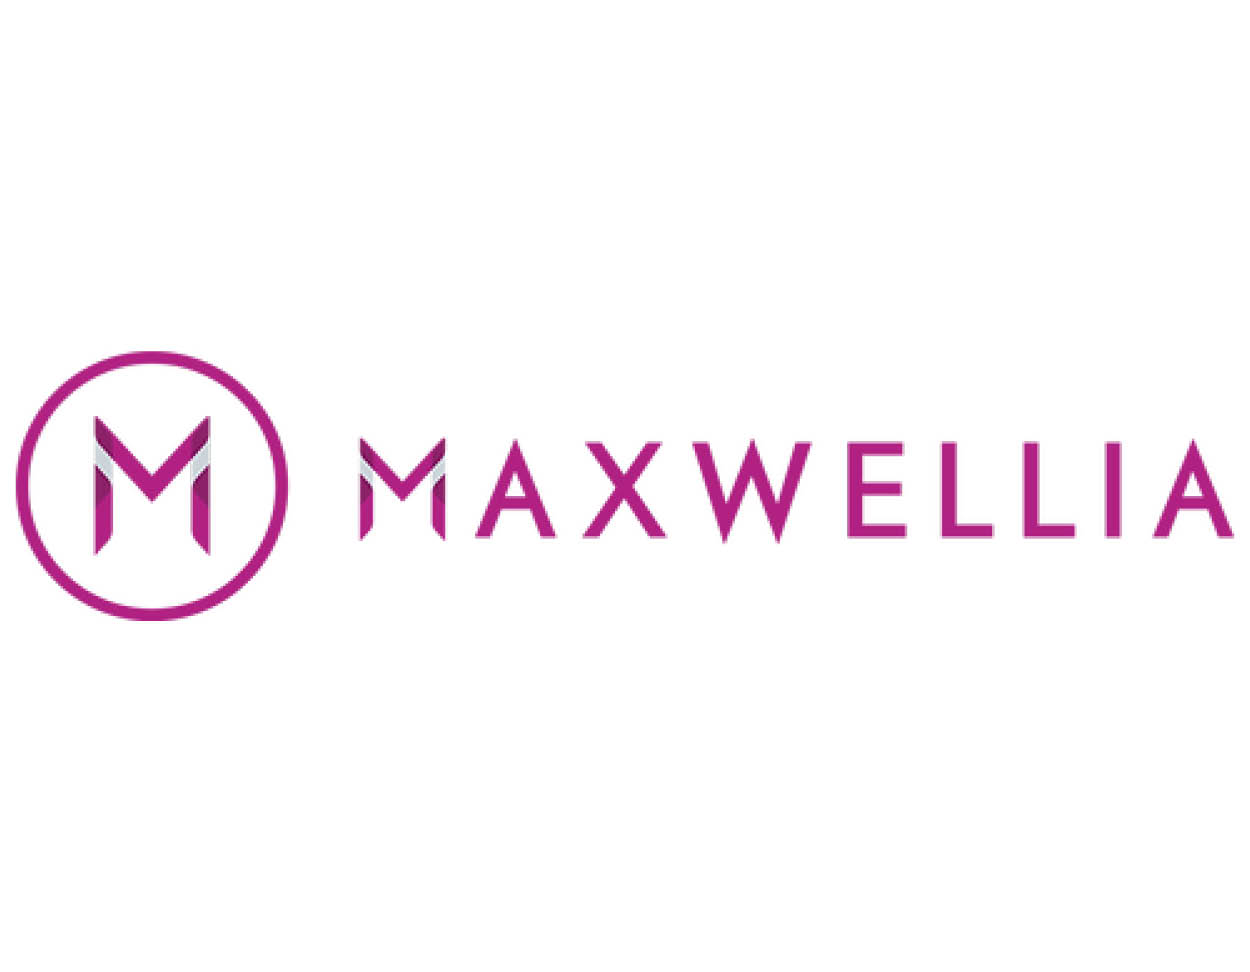 Maxwellia